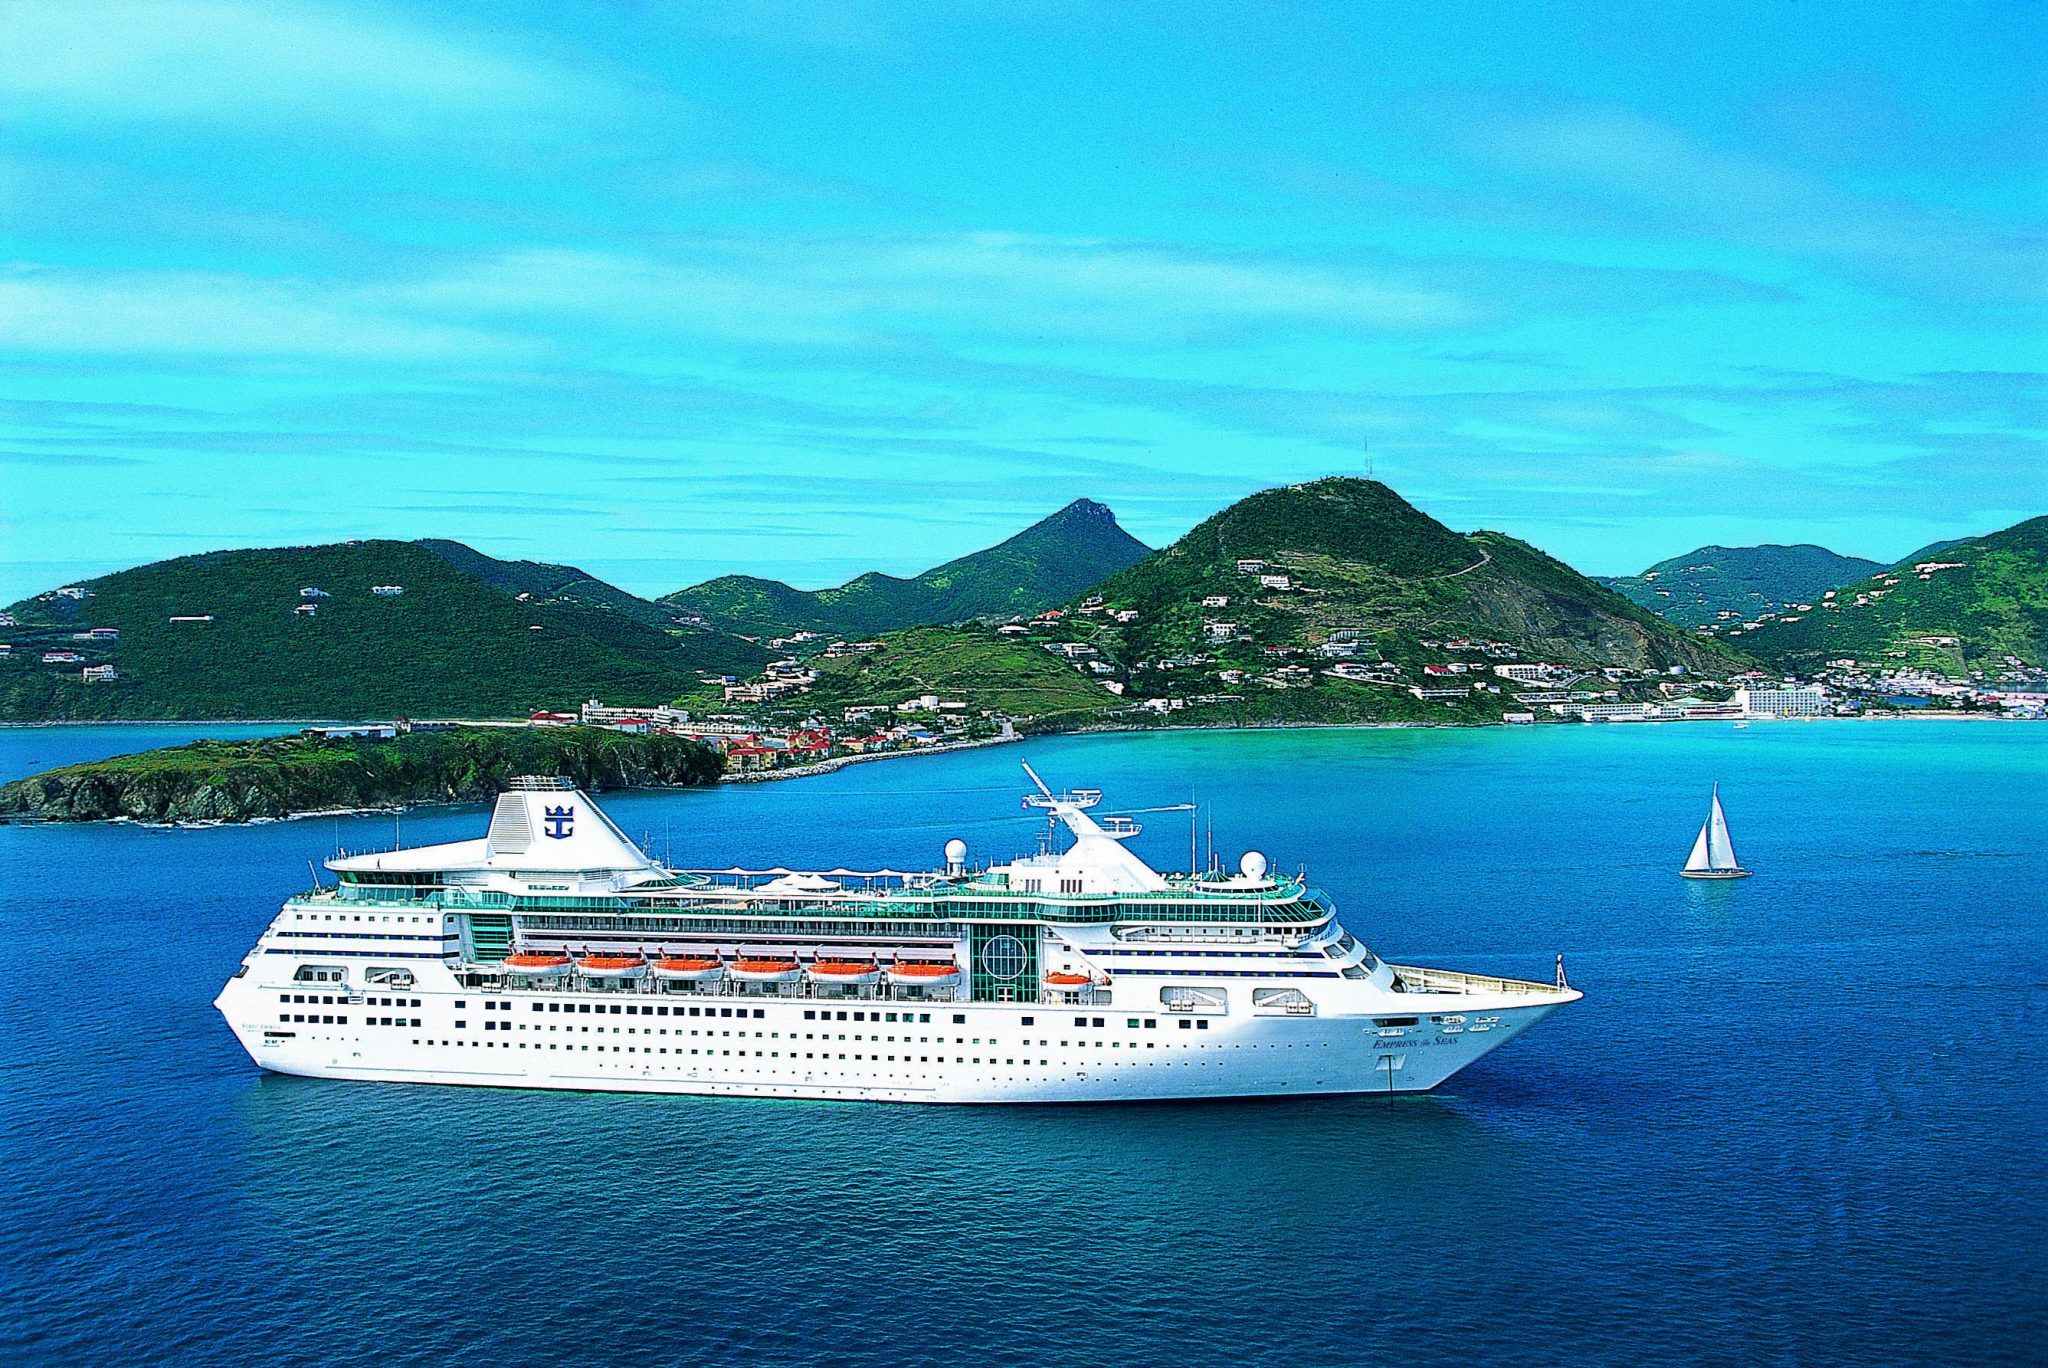 Best Cruises to Bermuda